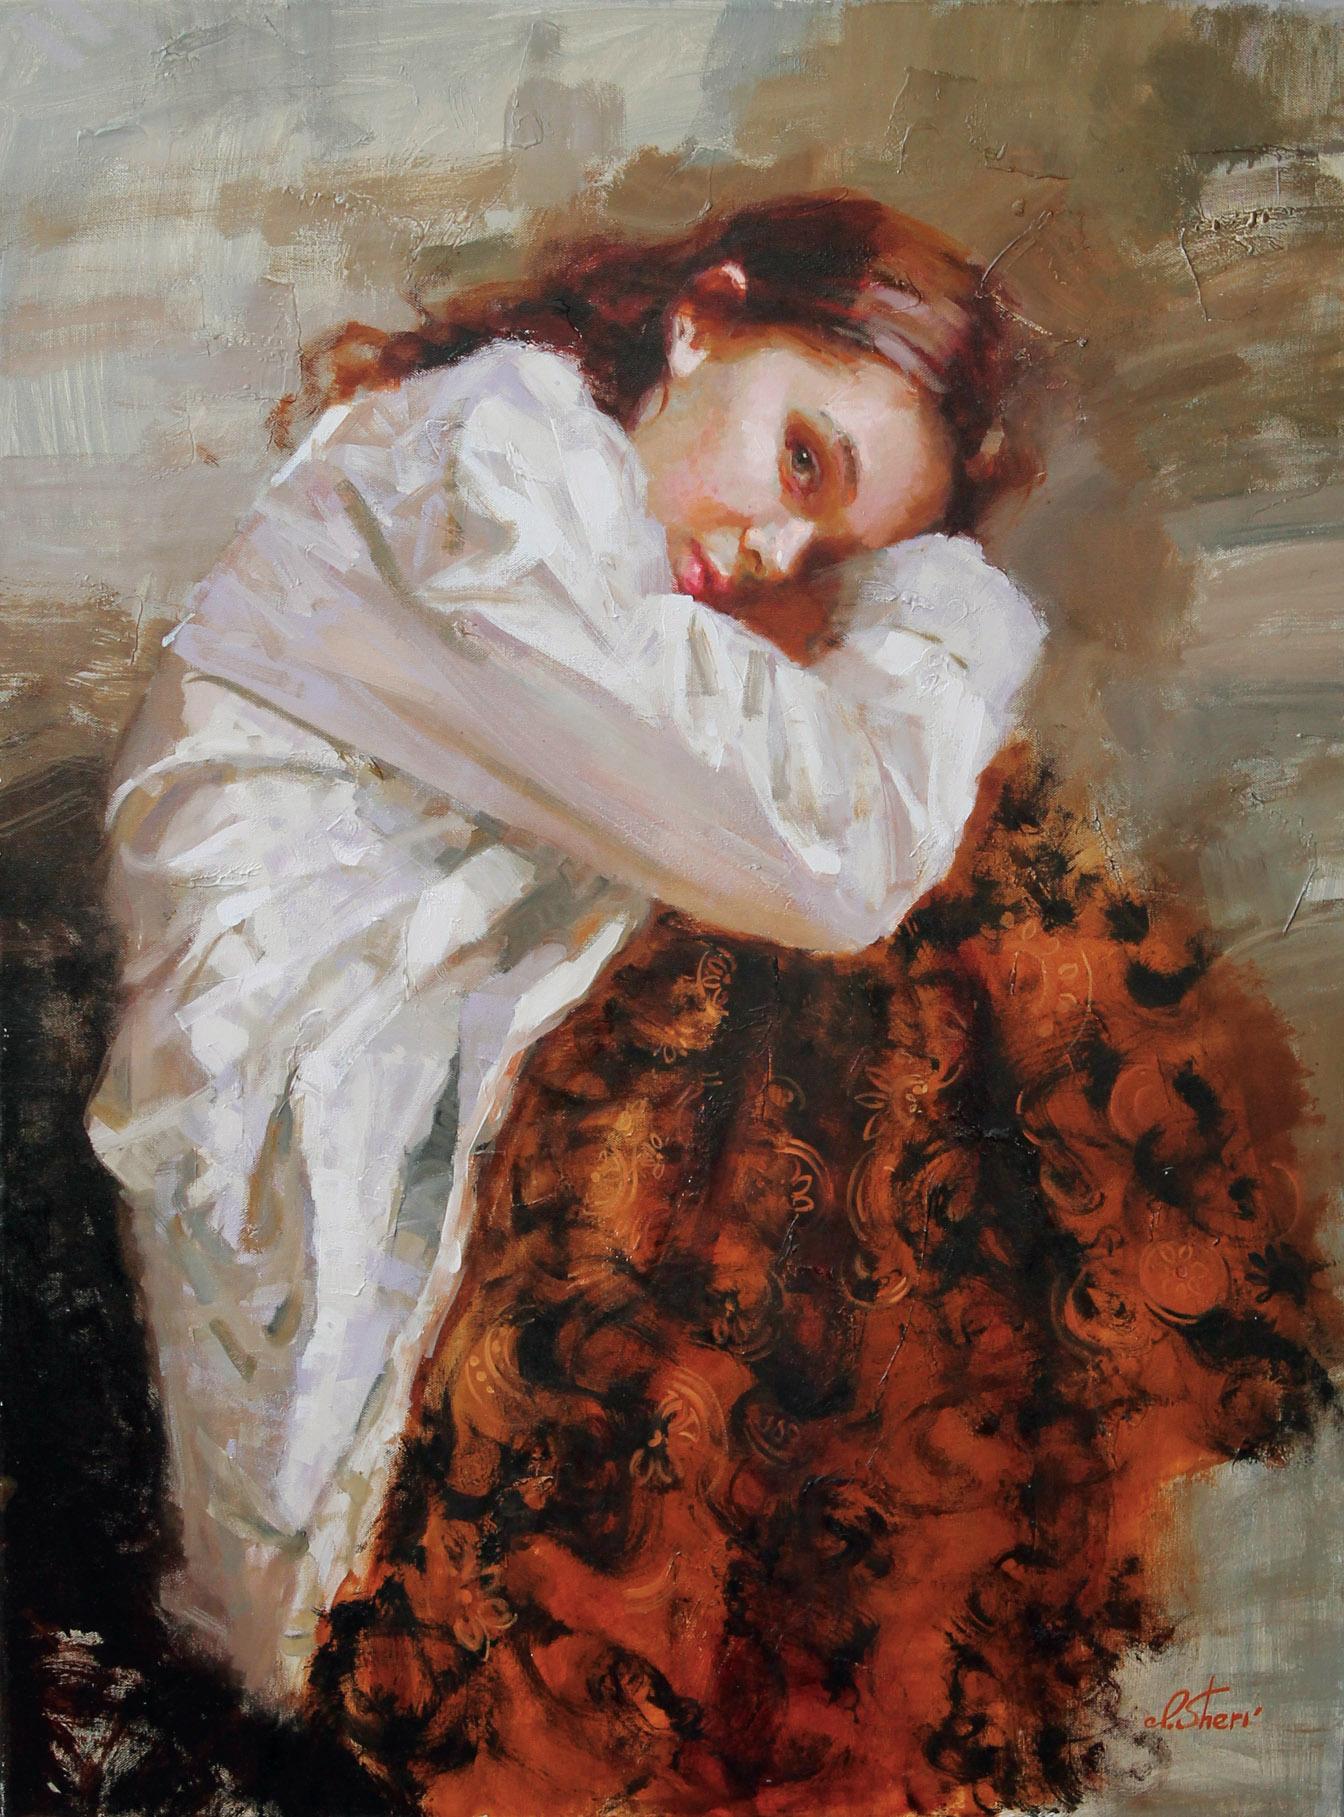 Irene Sheri Portrait Painting - Solitude